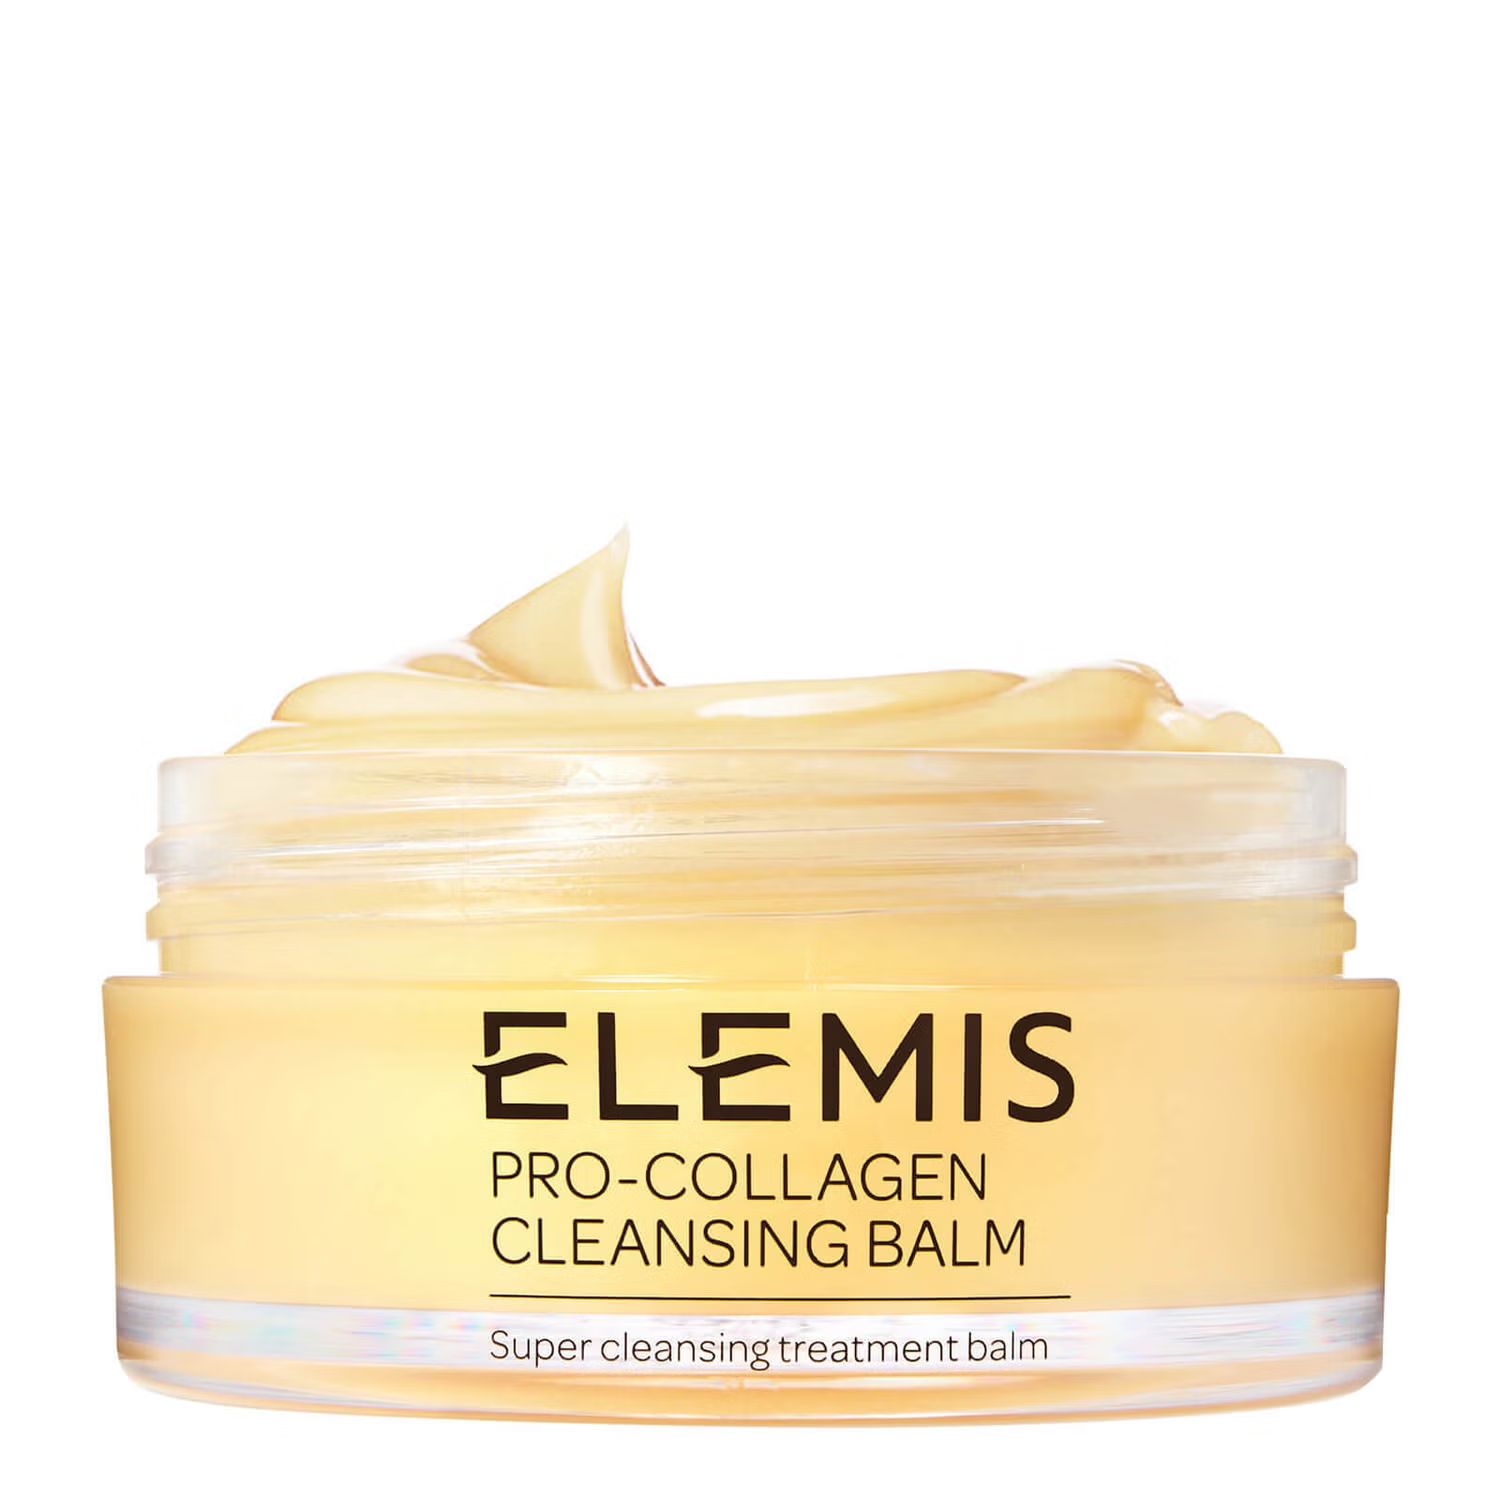 Elemis Pro-Collagen Cleansing Balm 100g | Look Fantastic (UK)